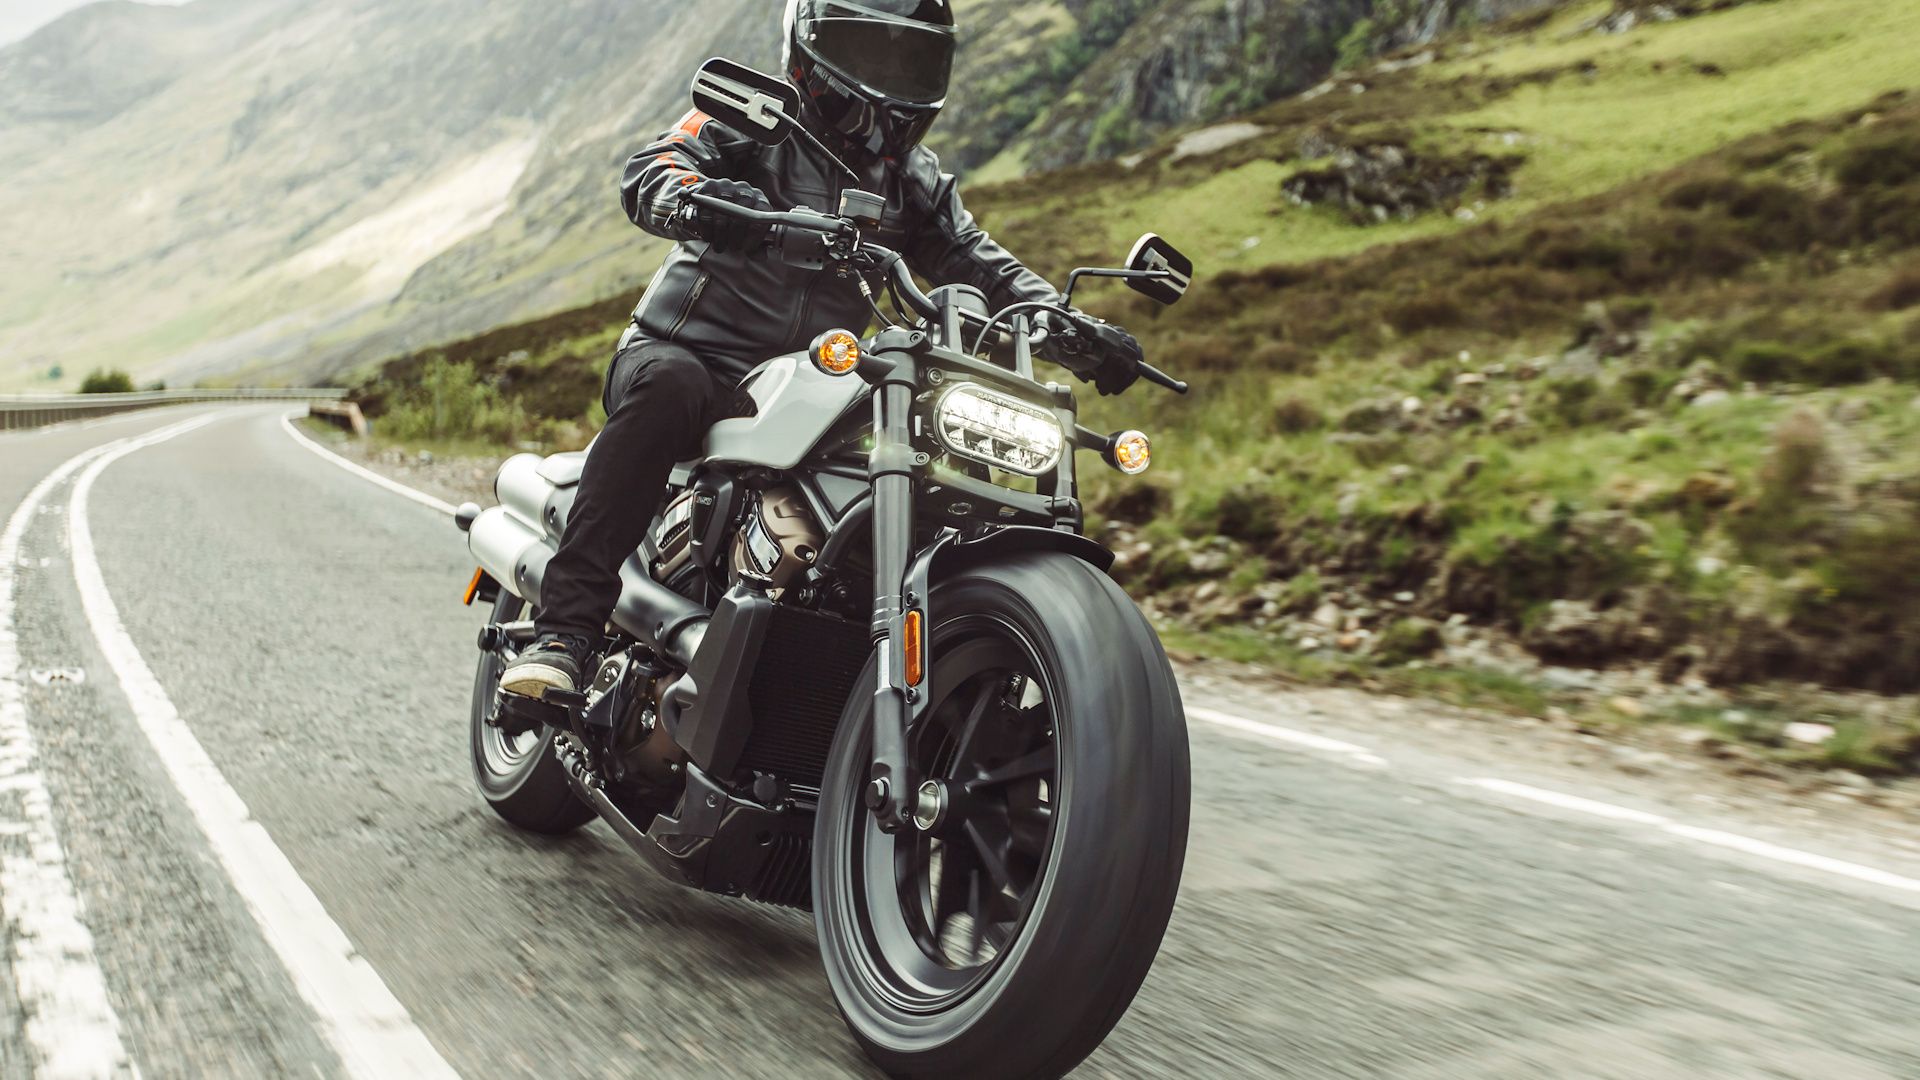 Branca 2021 Harley-Davidson Sportster S saindo de uma curva